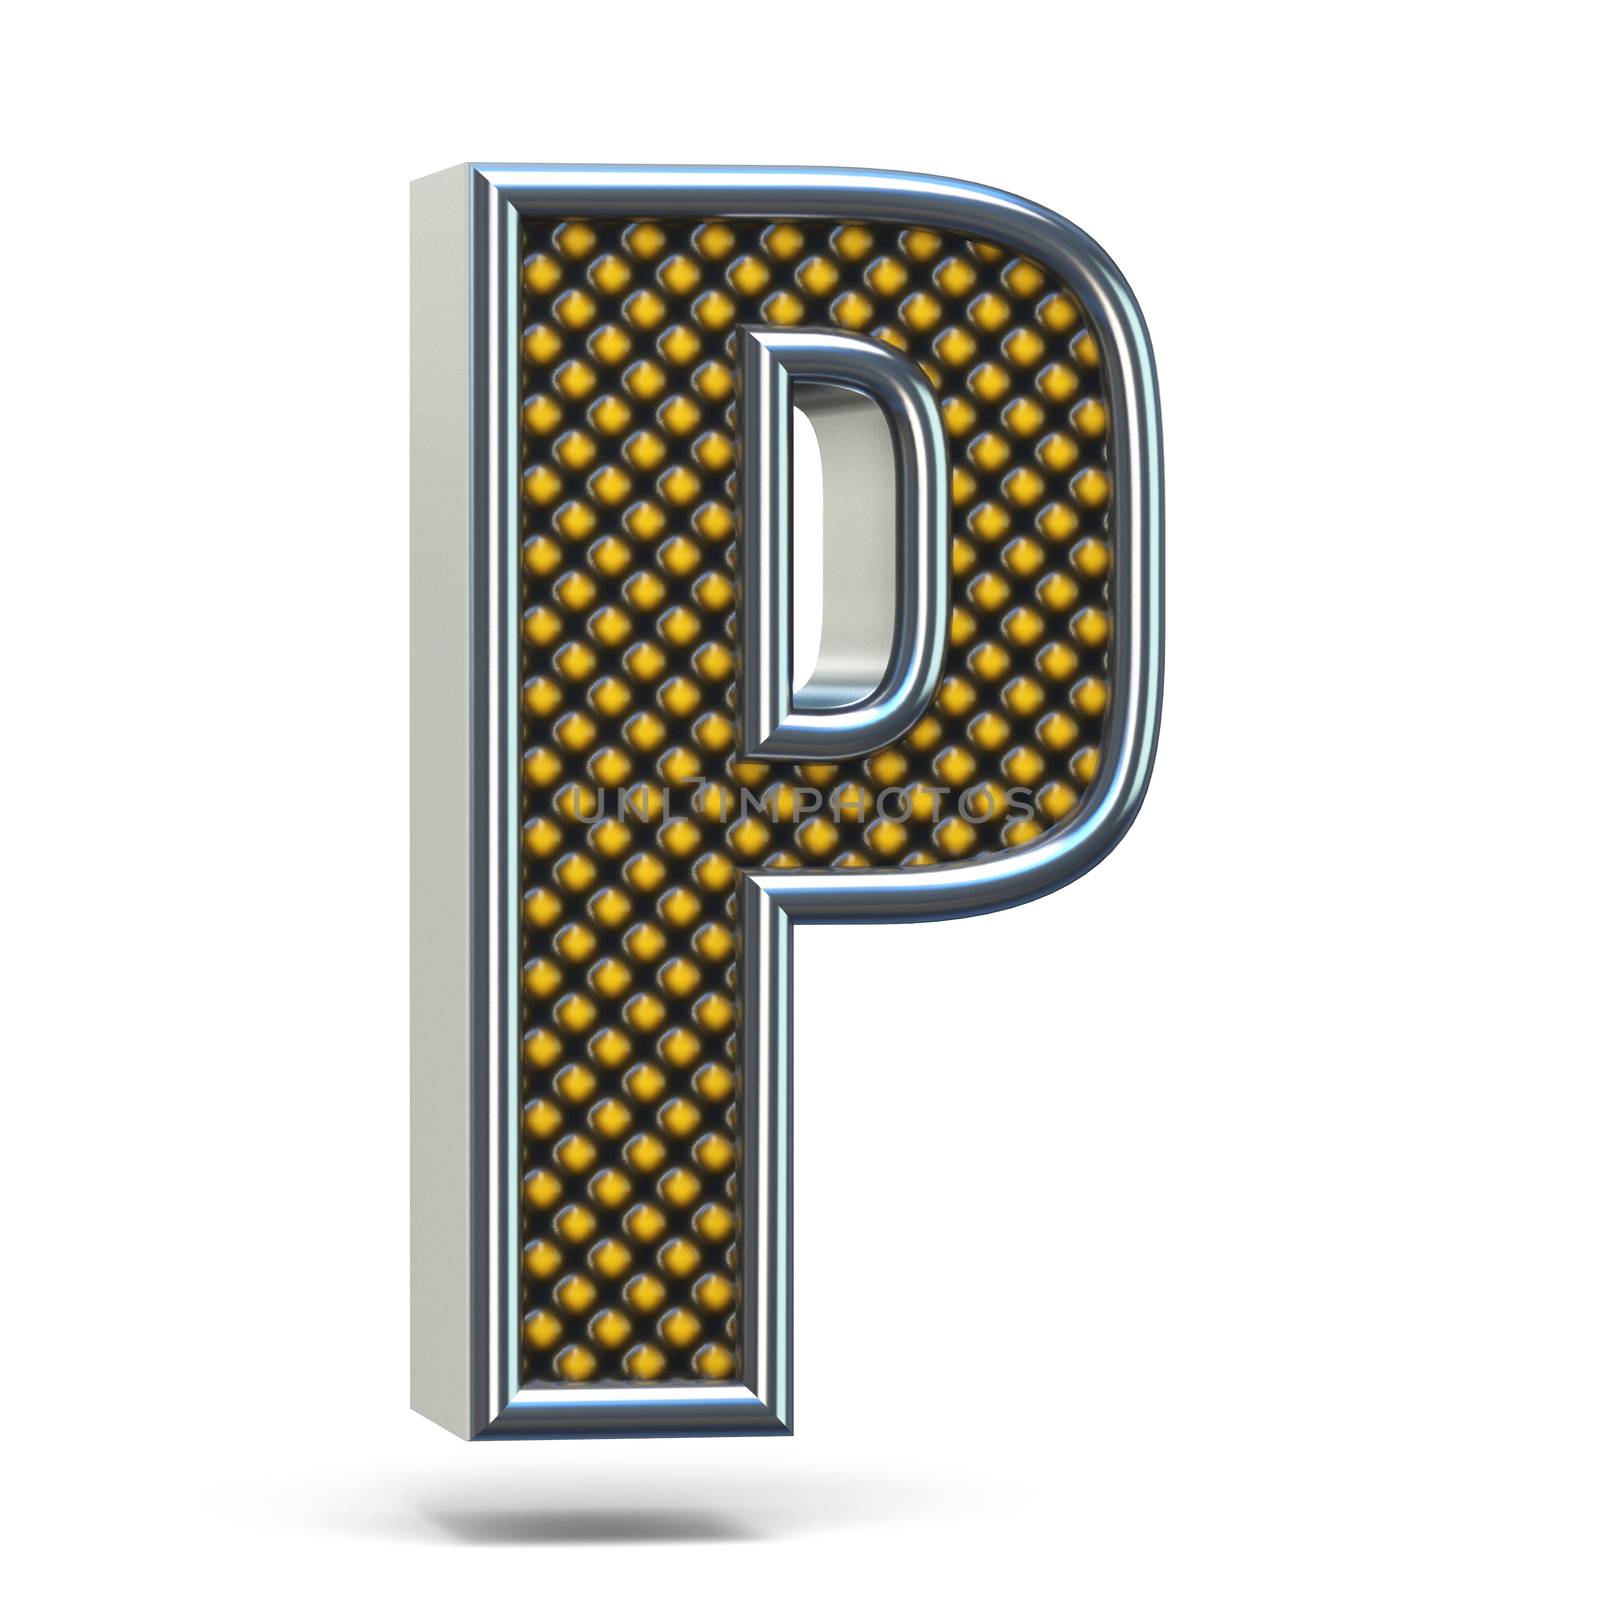 Chrome metal orange dotted font Letter P 3D render illustration isolated on white background